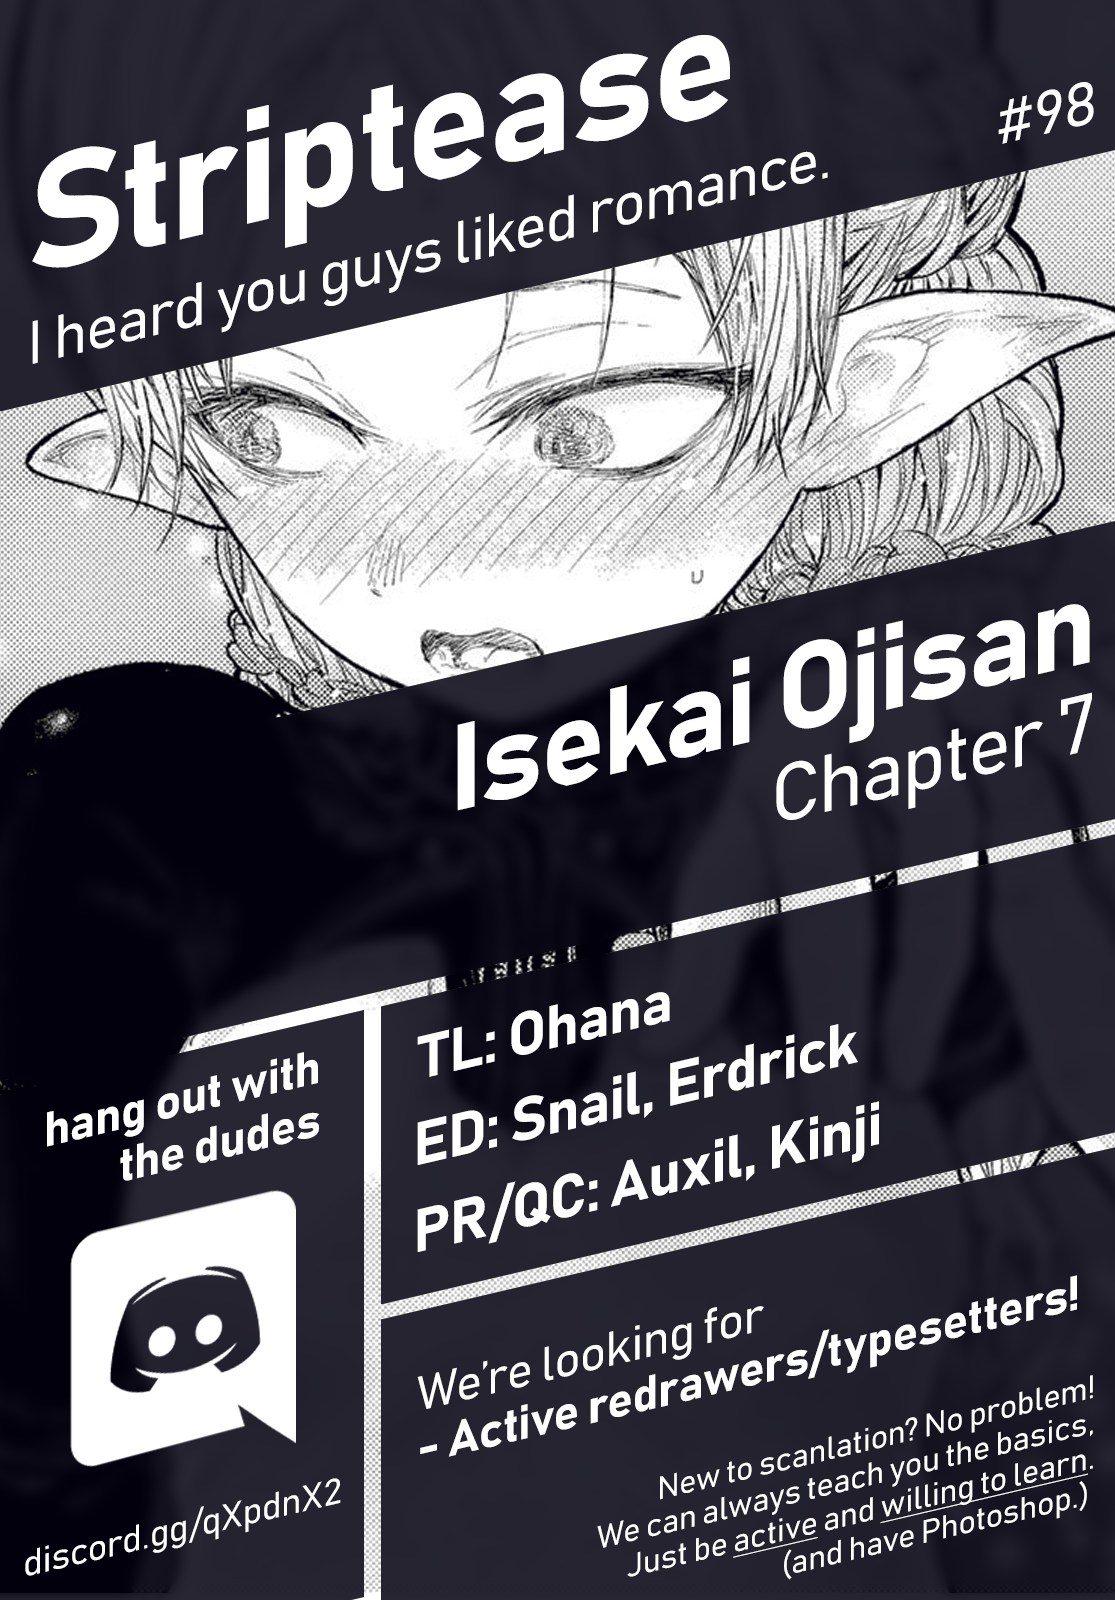 Isekai Ojisan Vol.1 Chapter 7 - Picture 1